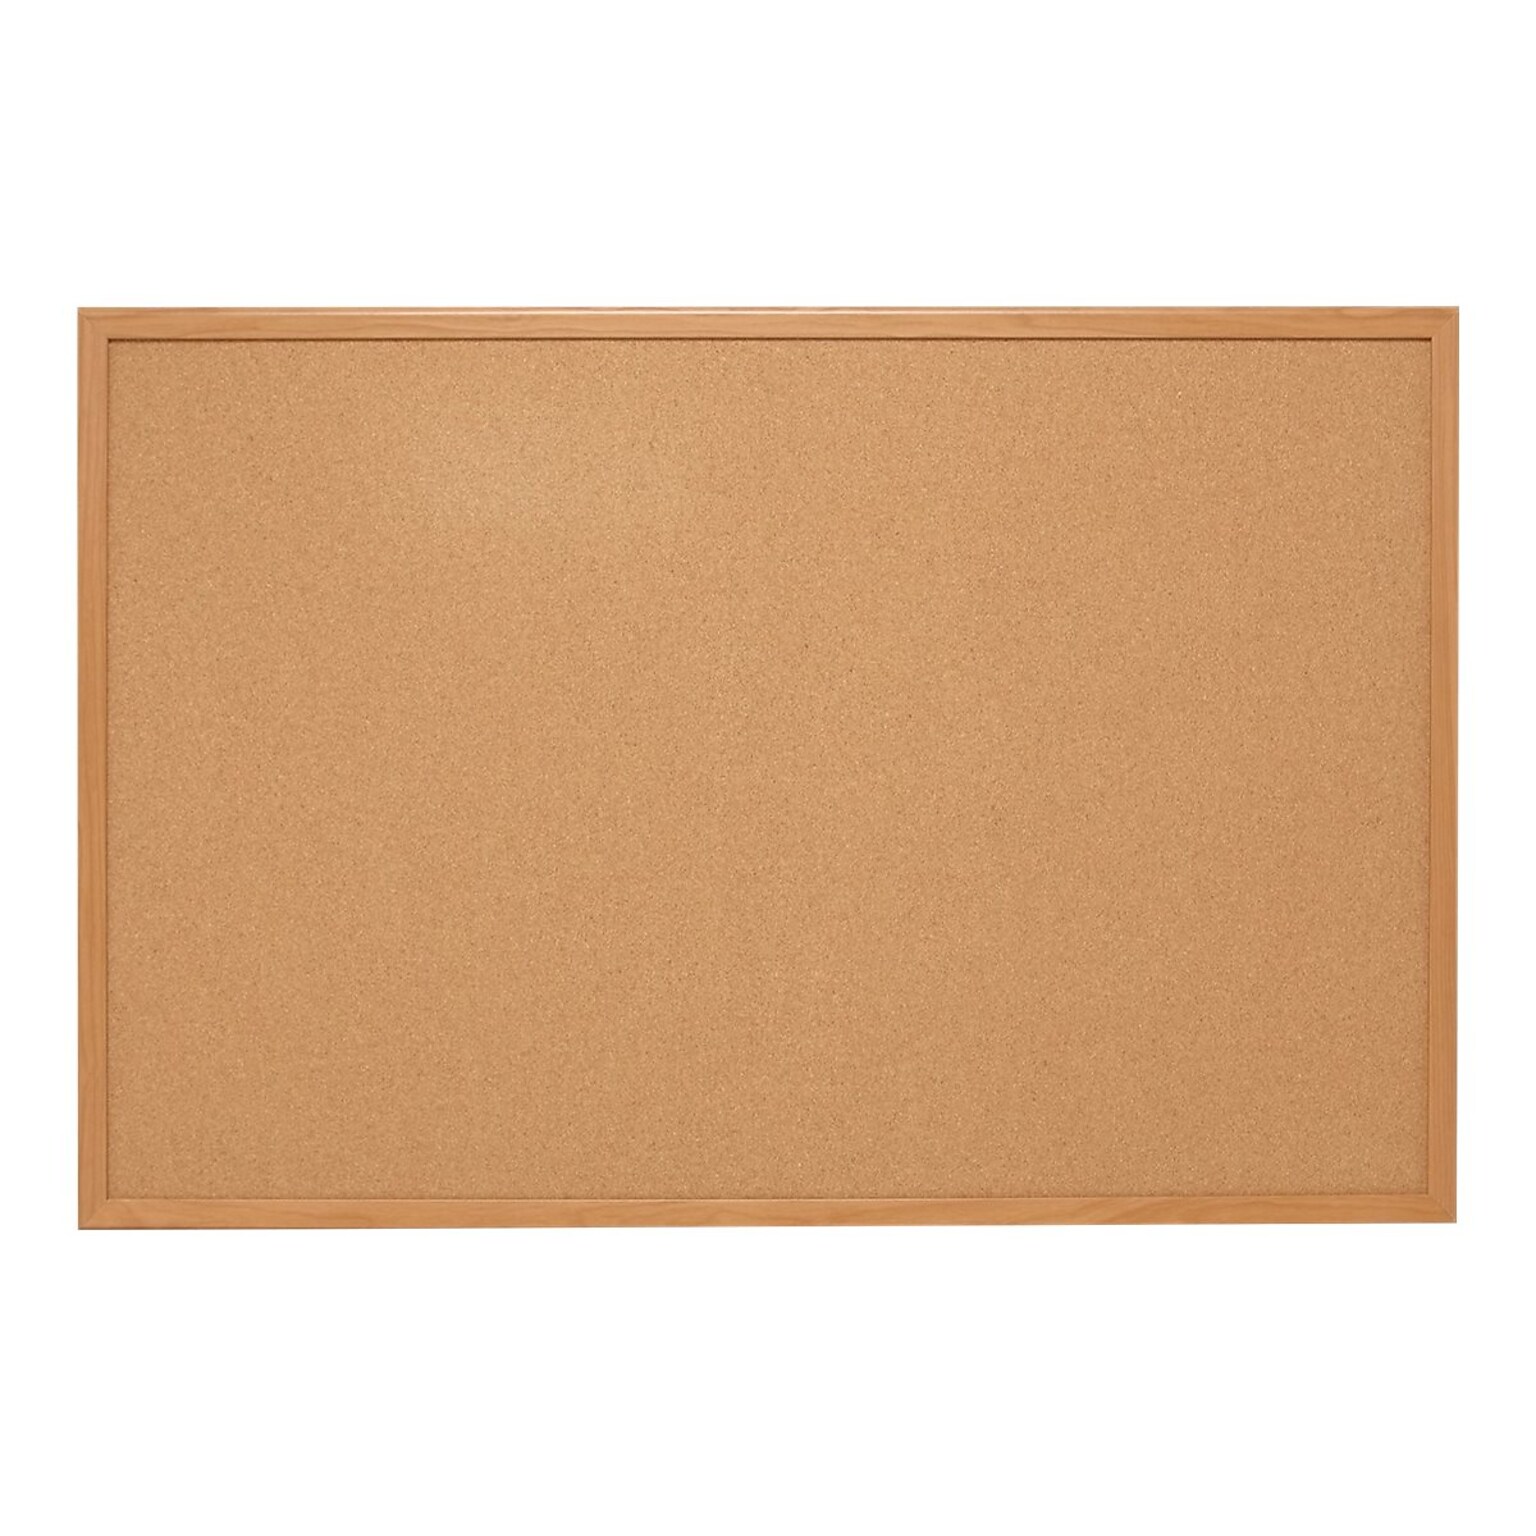 Quill Brand® Standard Durable Cork Bulletin Board, Oak Frame, 5W x 3H (28318-CC)